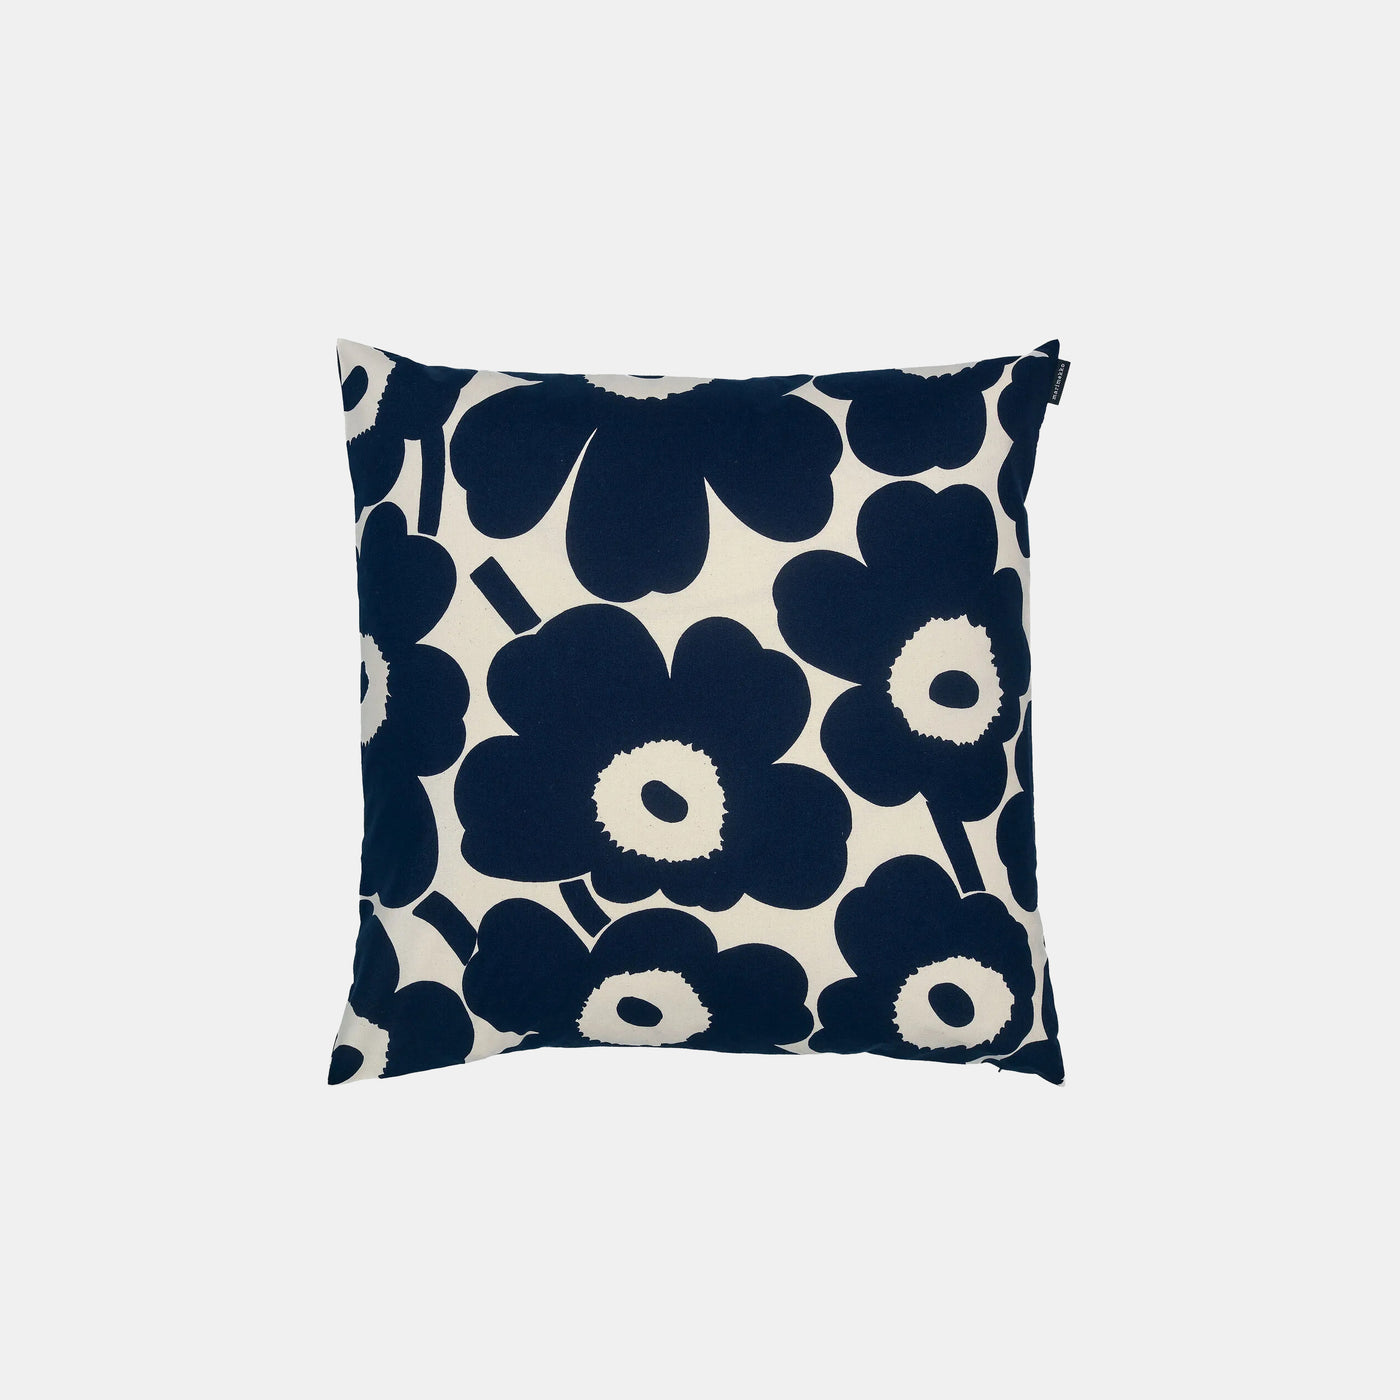 Pieni Unikko Cushion Cover 50 X 50cm - Dark blue